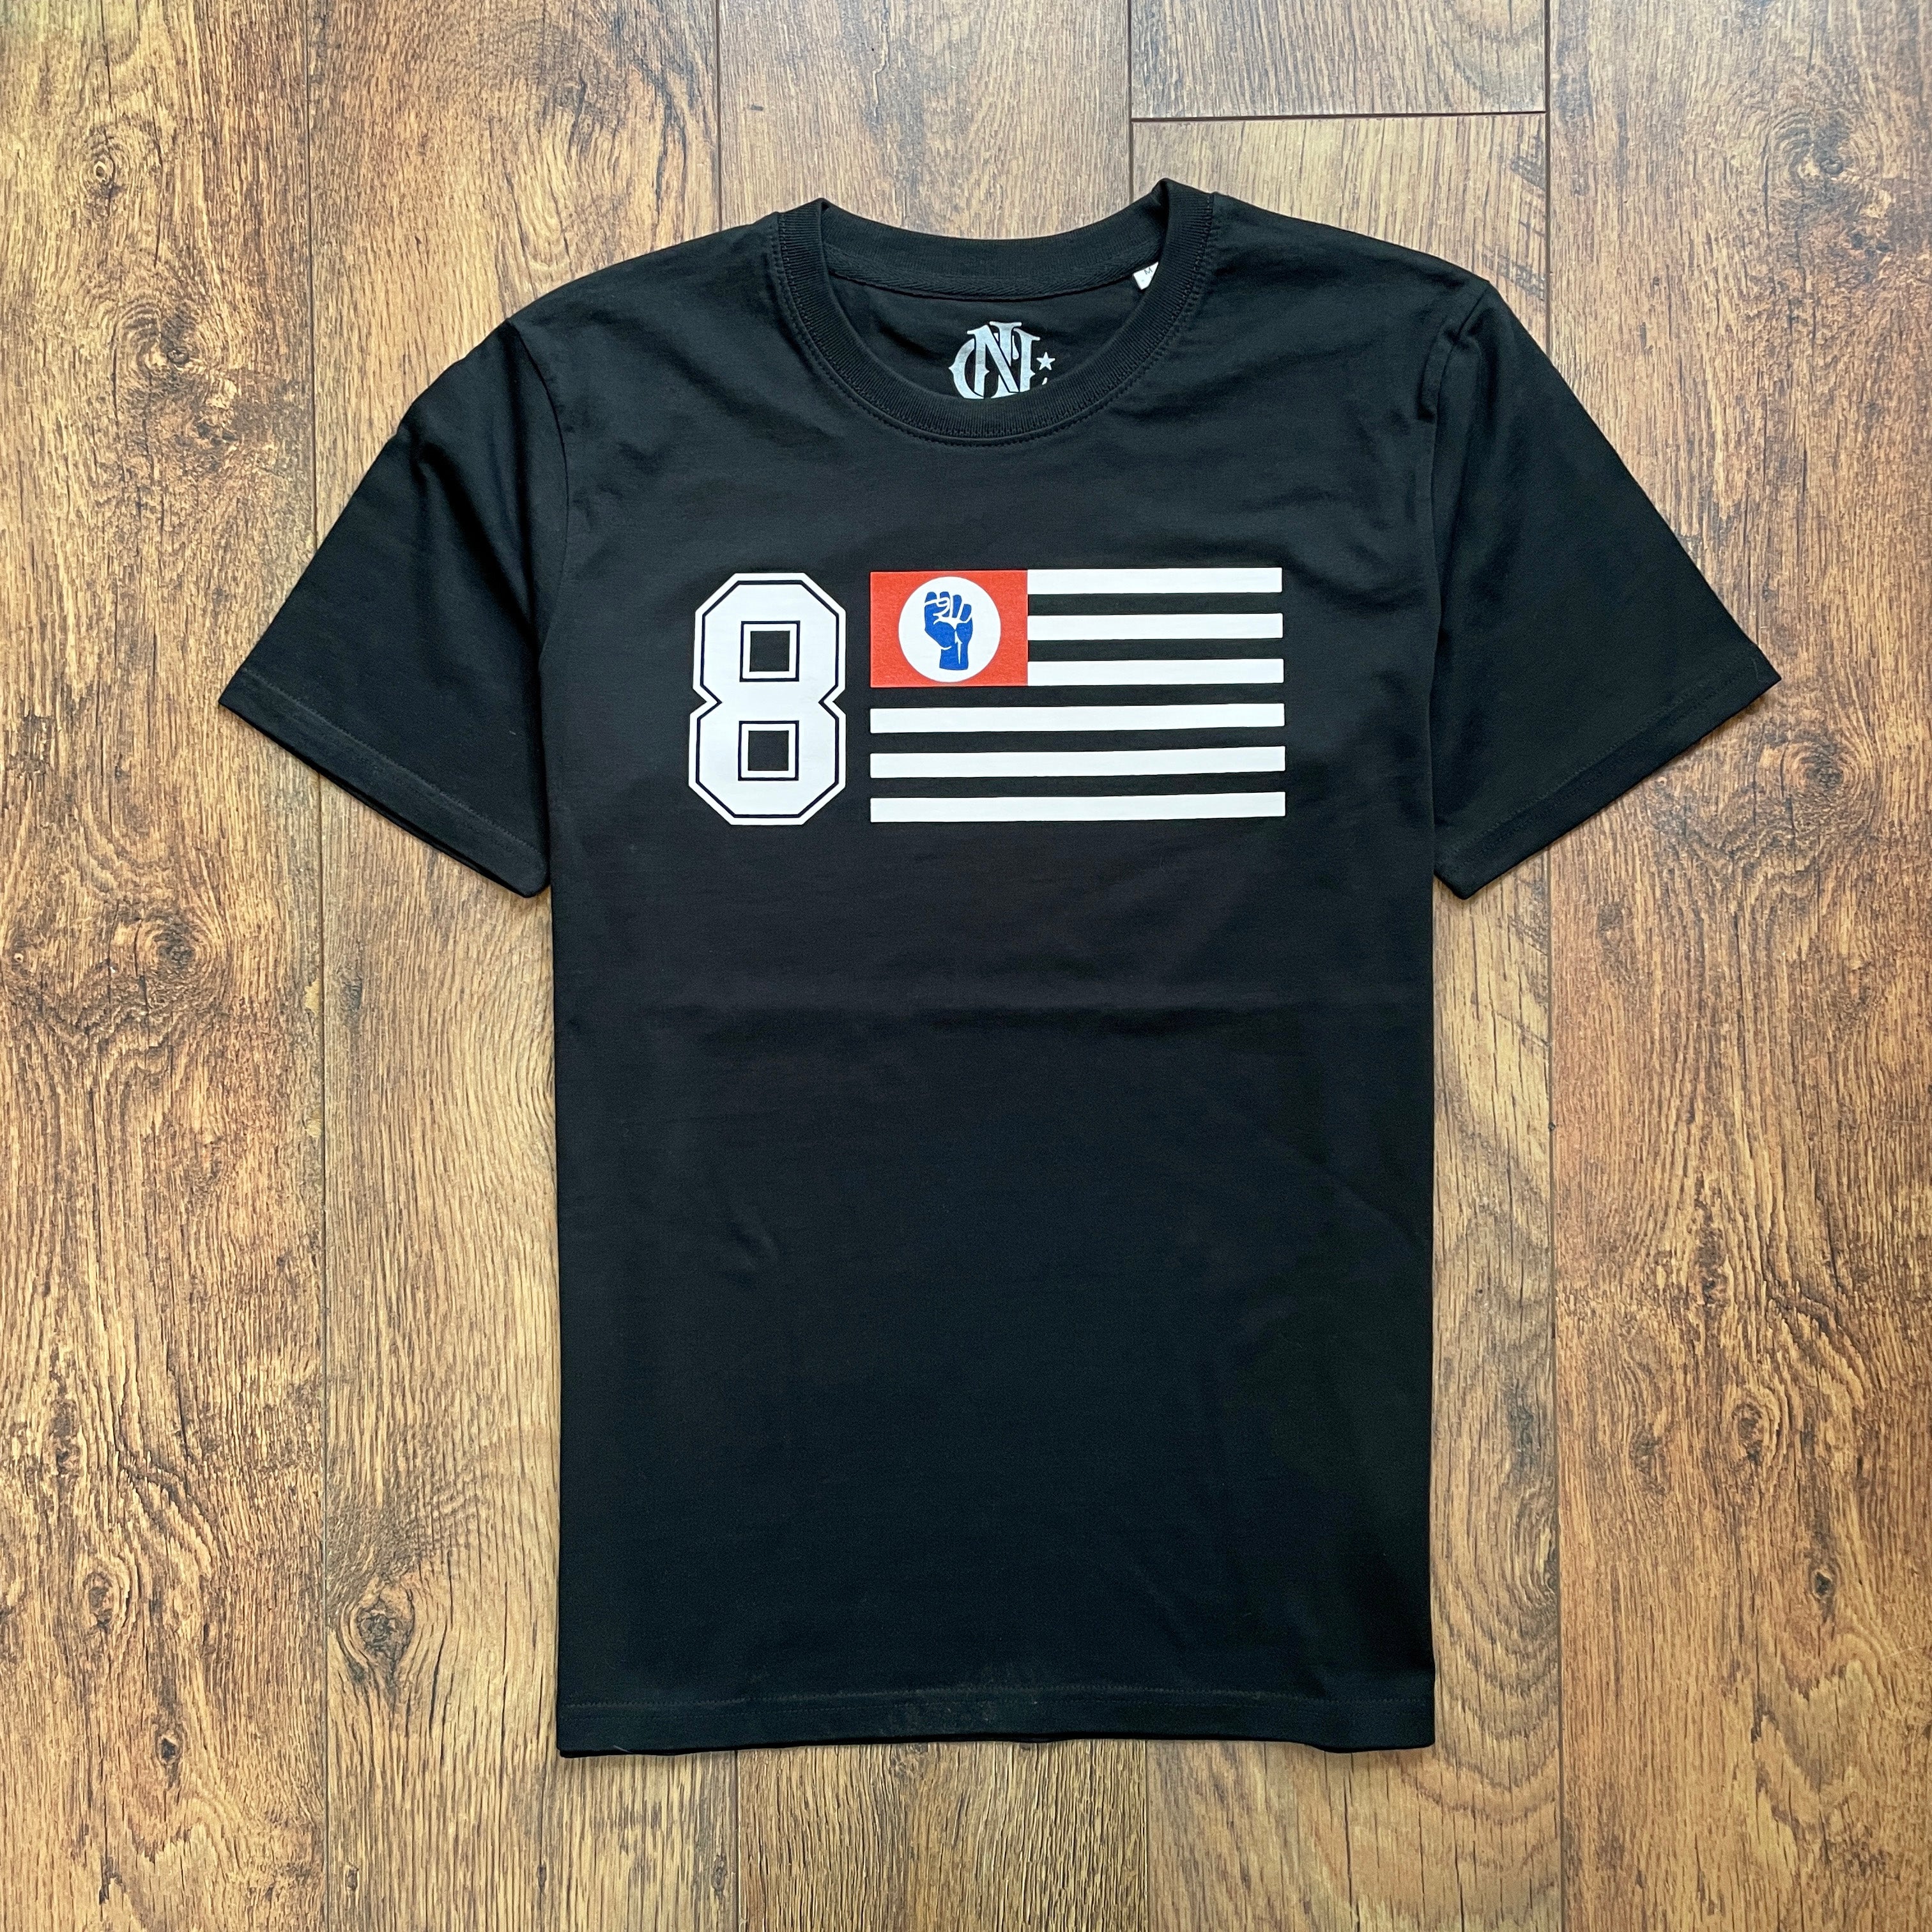 Socrates Corinthians shirt t-shirt